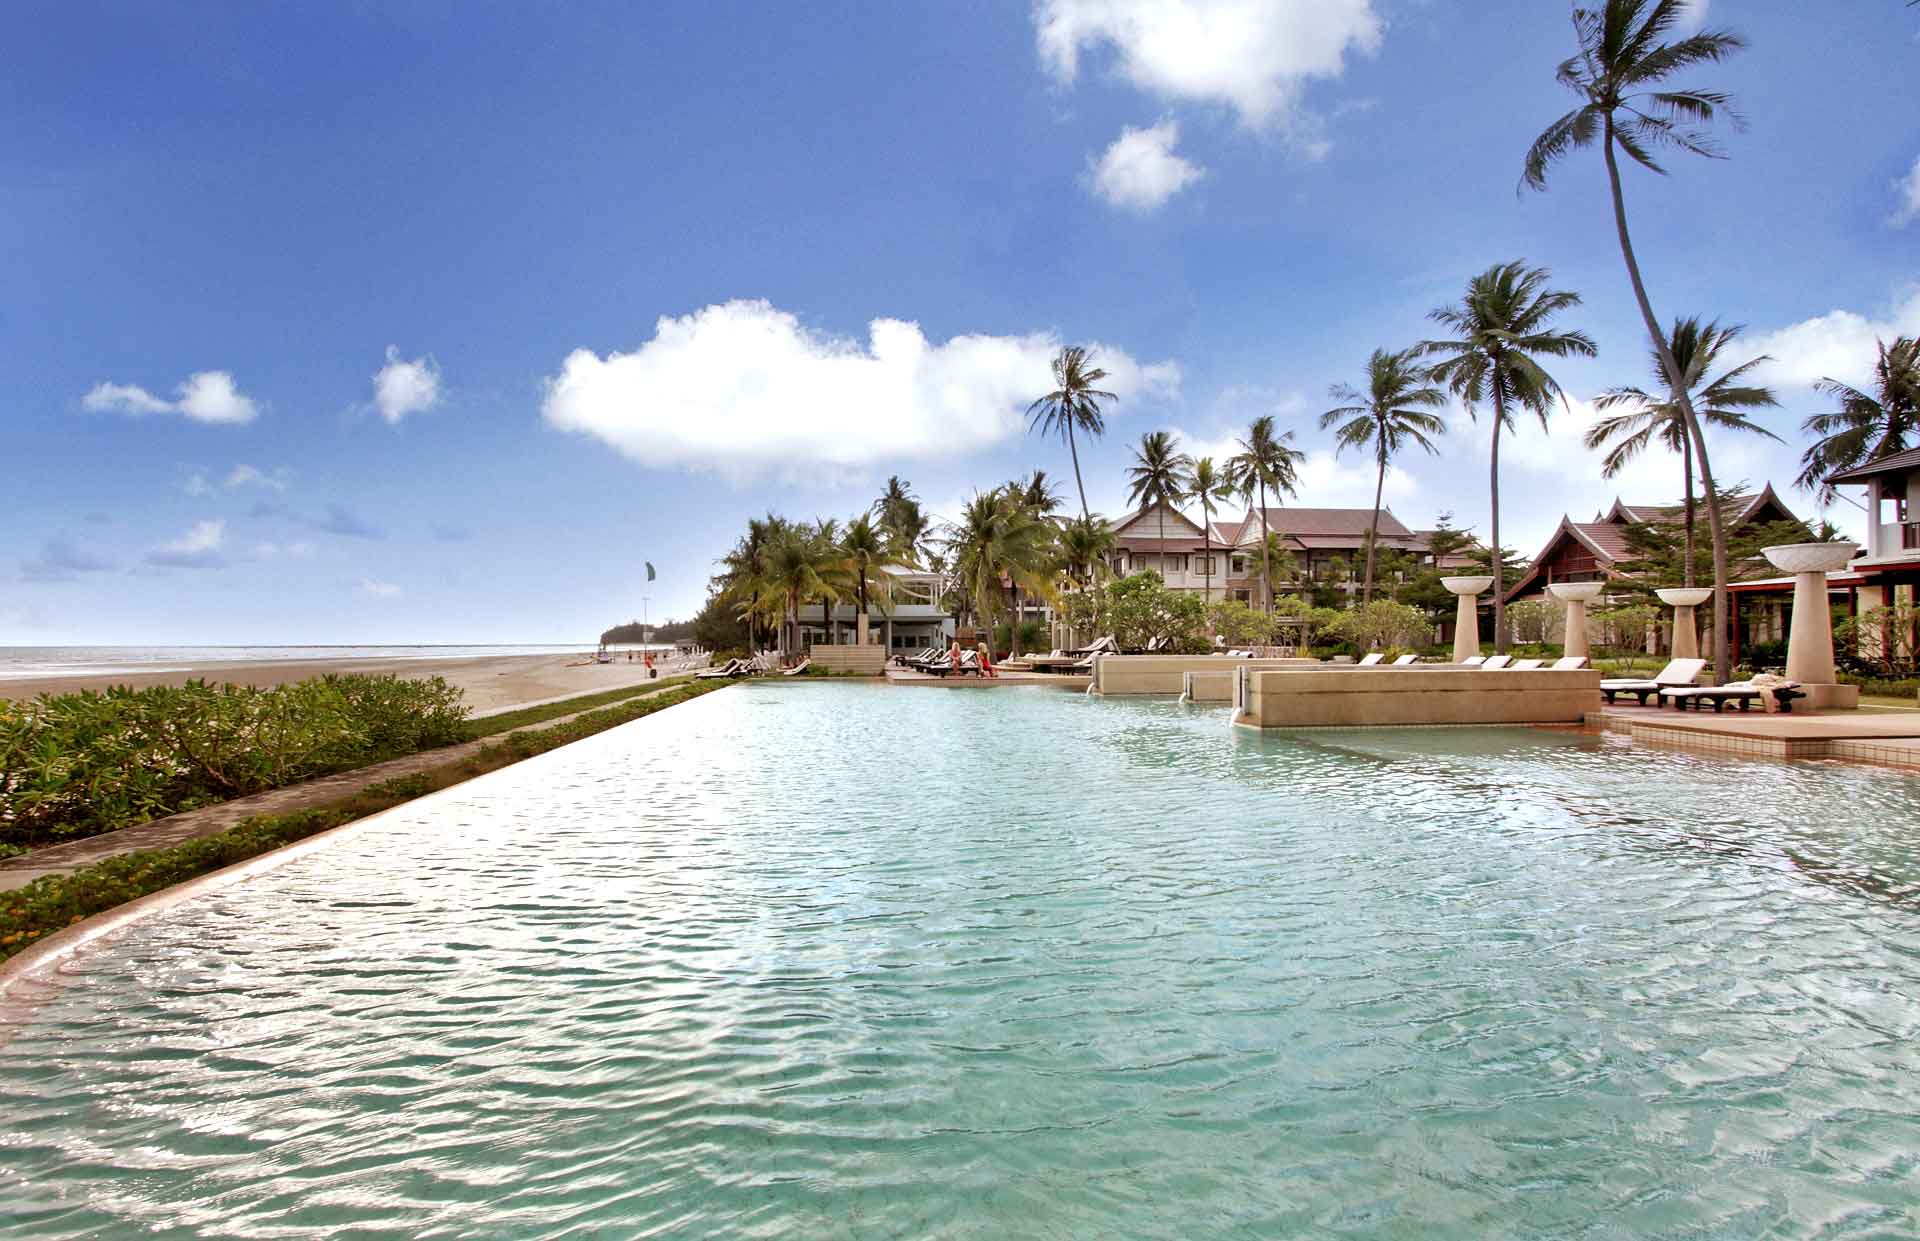 Apsara beachfront resort villa 4. Apsara Beachfront Resort Villa 4 као лак. Као лак центр. Апсара пляж. Отель Khao Lak Kalima Resort & Villas 5 *.